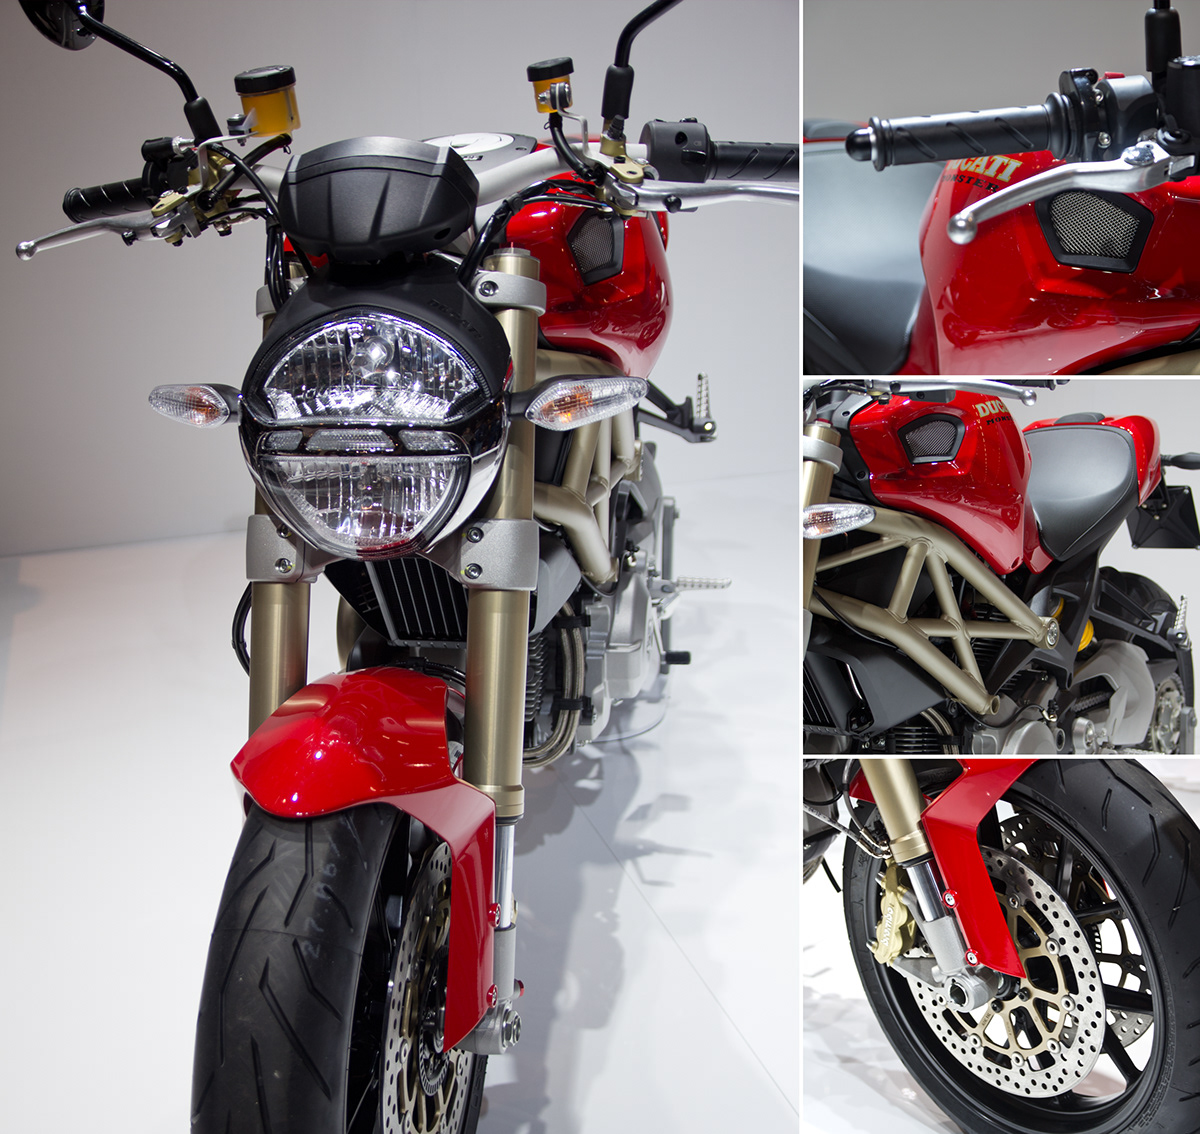 intermot Honda yamaha Kawasaki Ducati BMW bikes race replica cologne